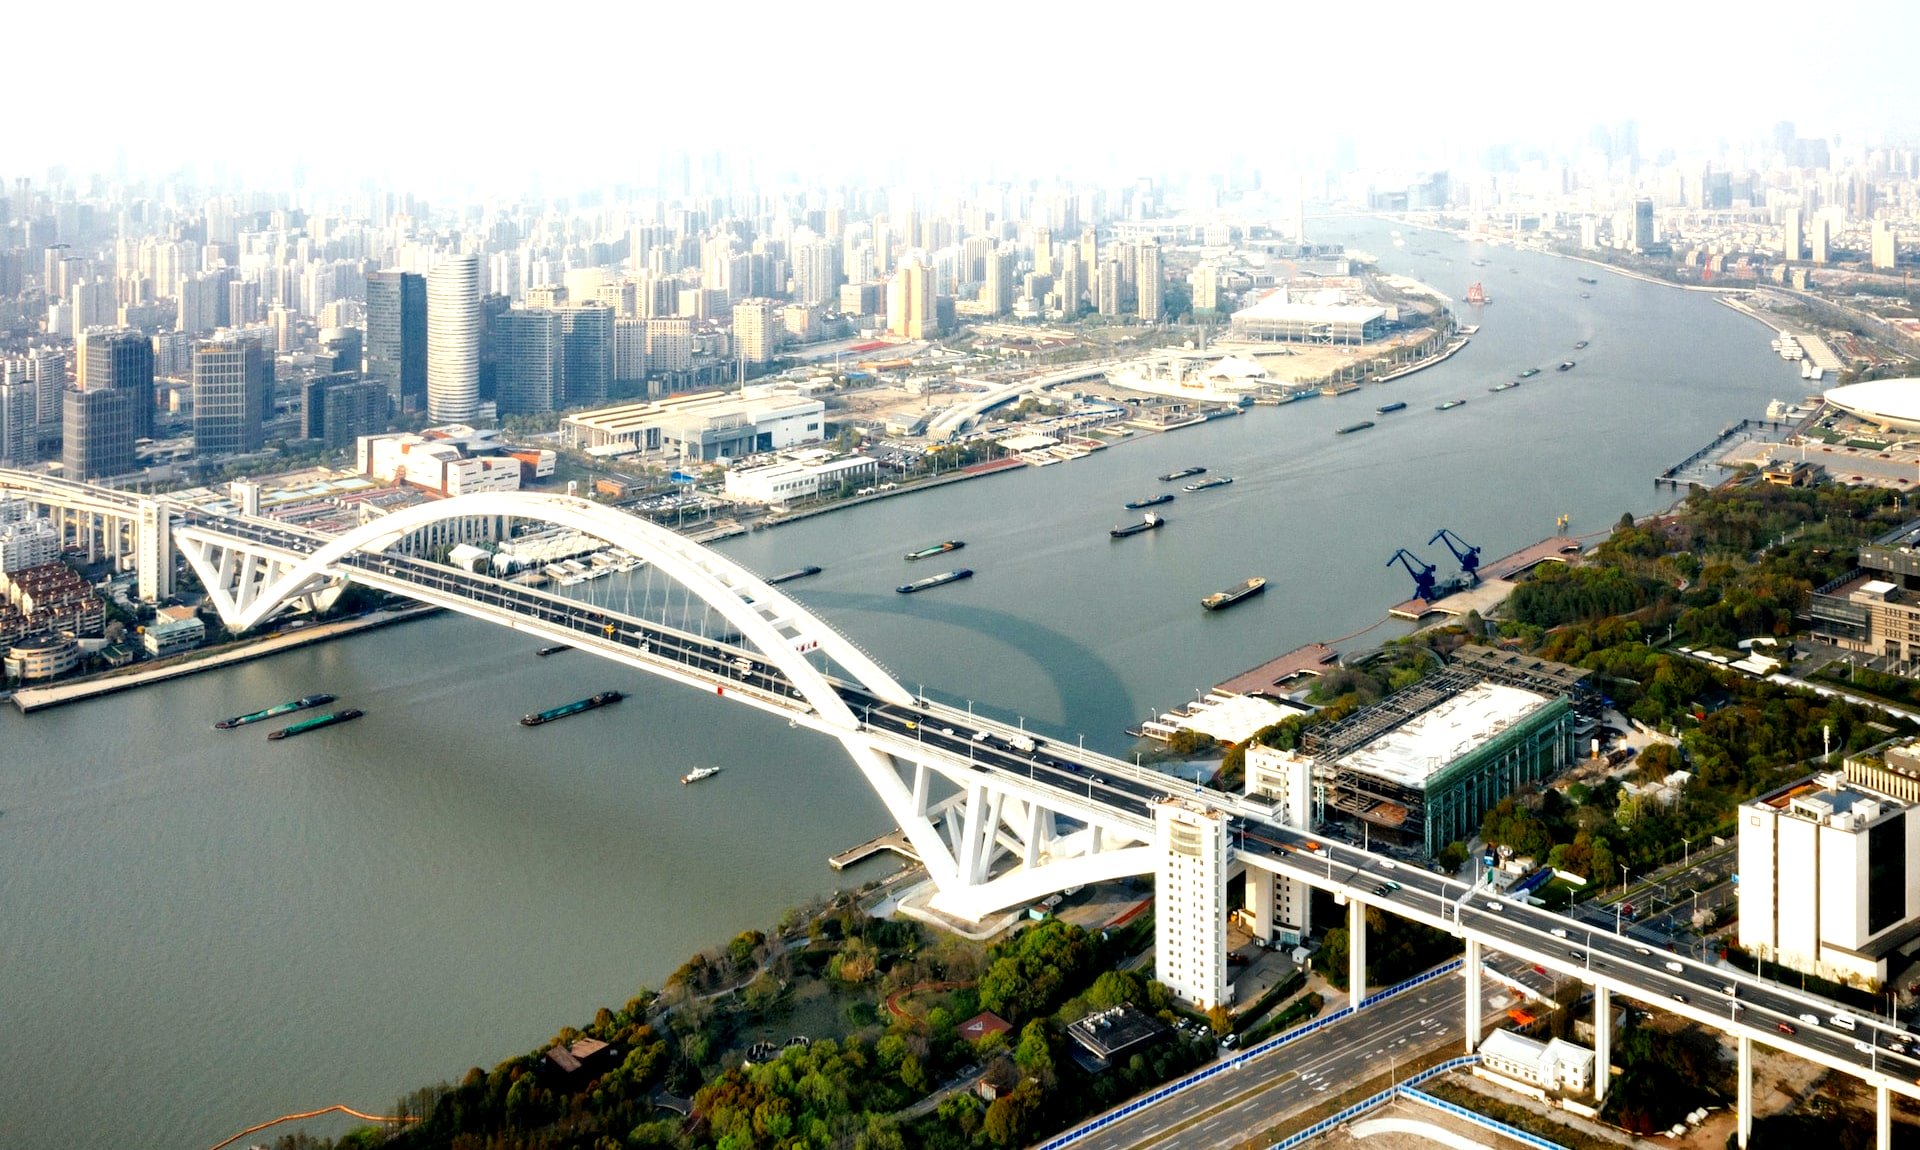 Lupu Bridge in Shanghai, China